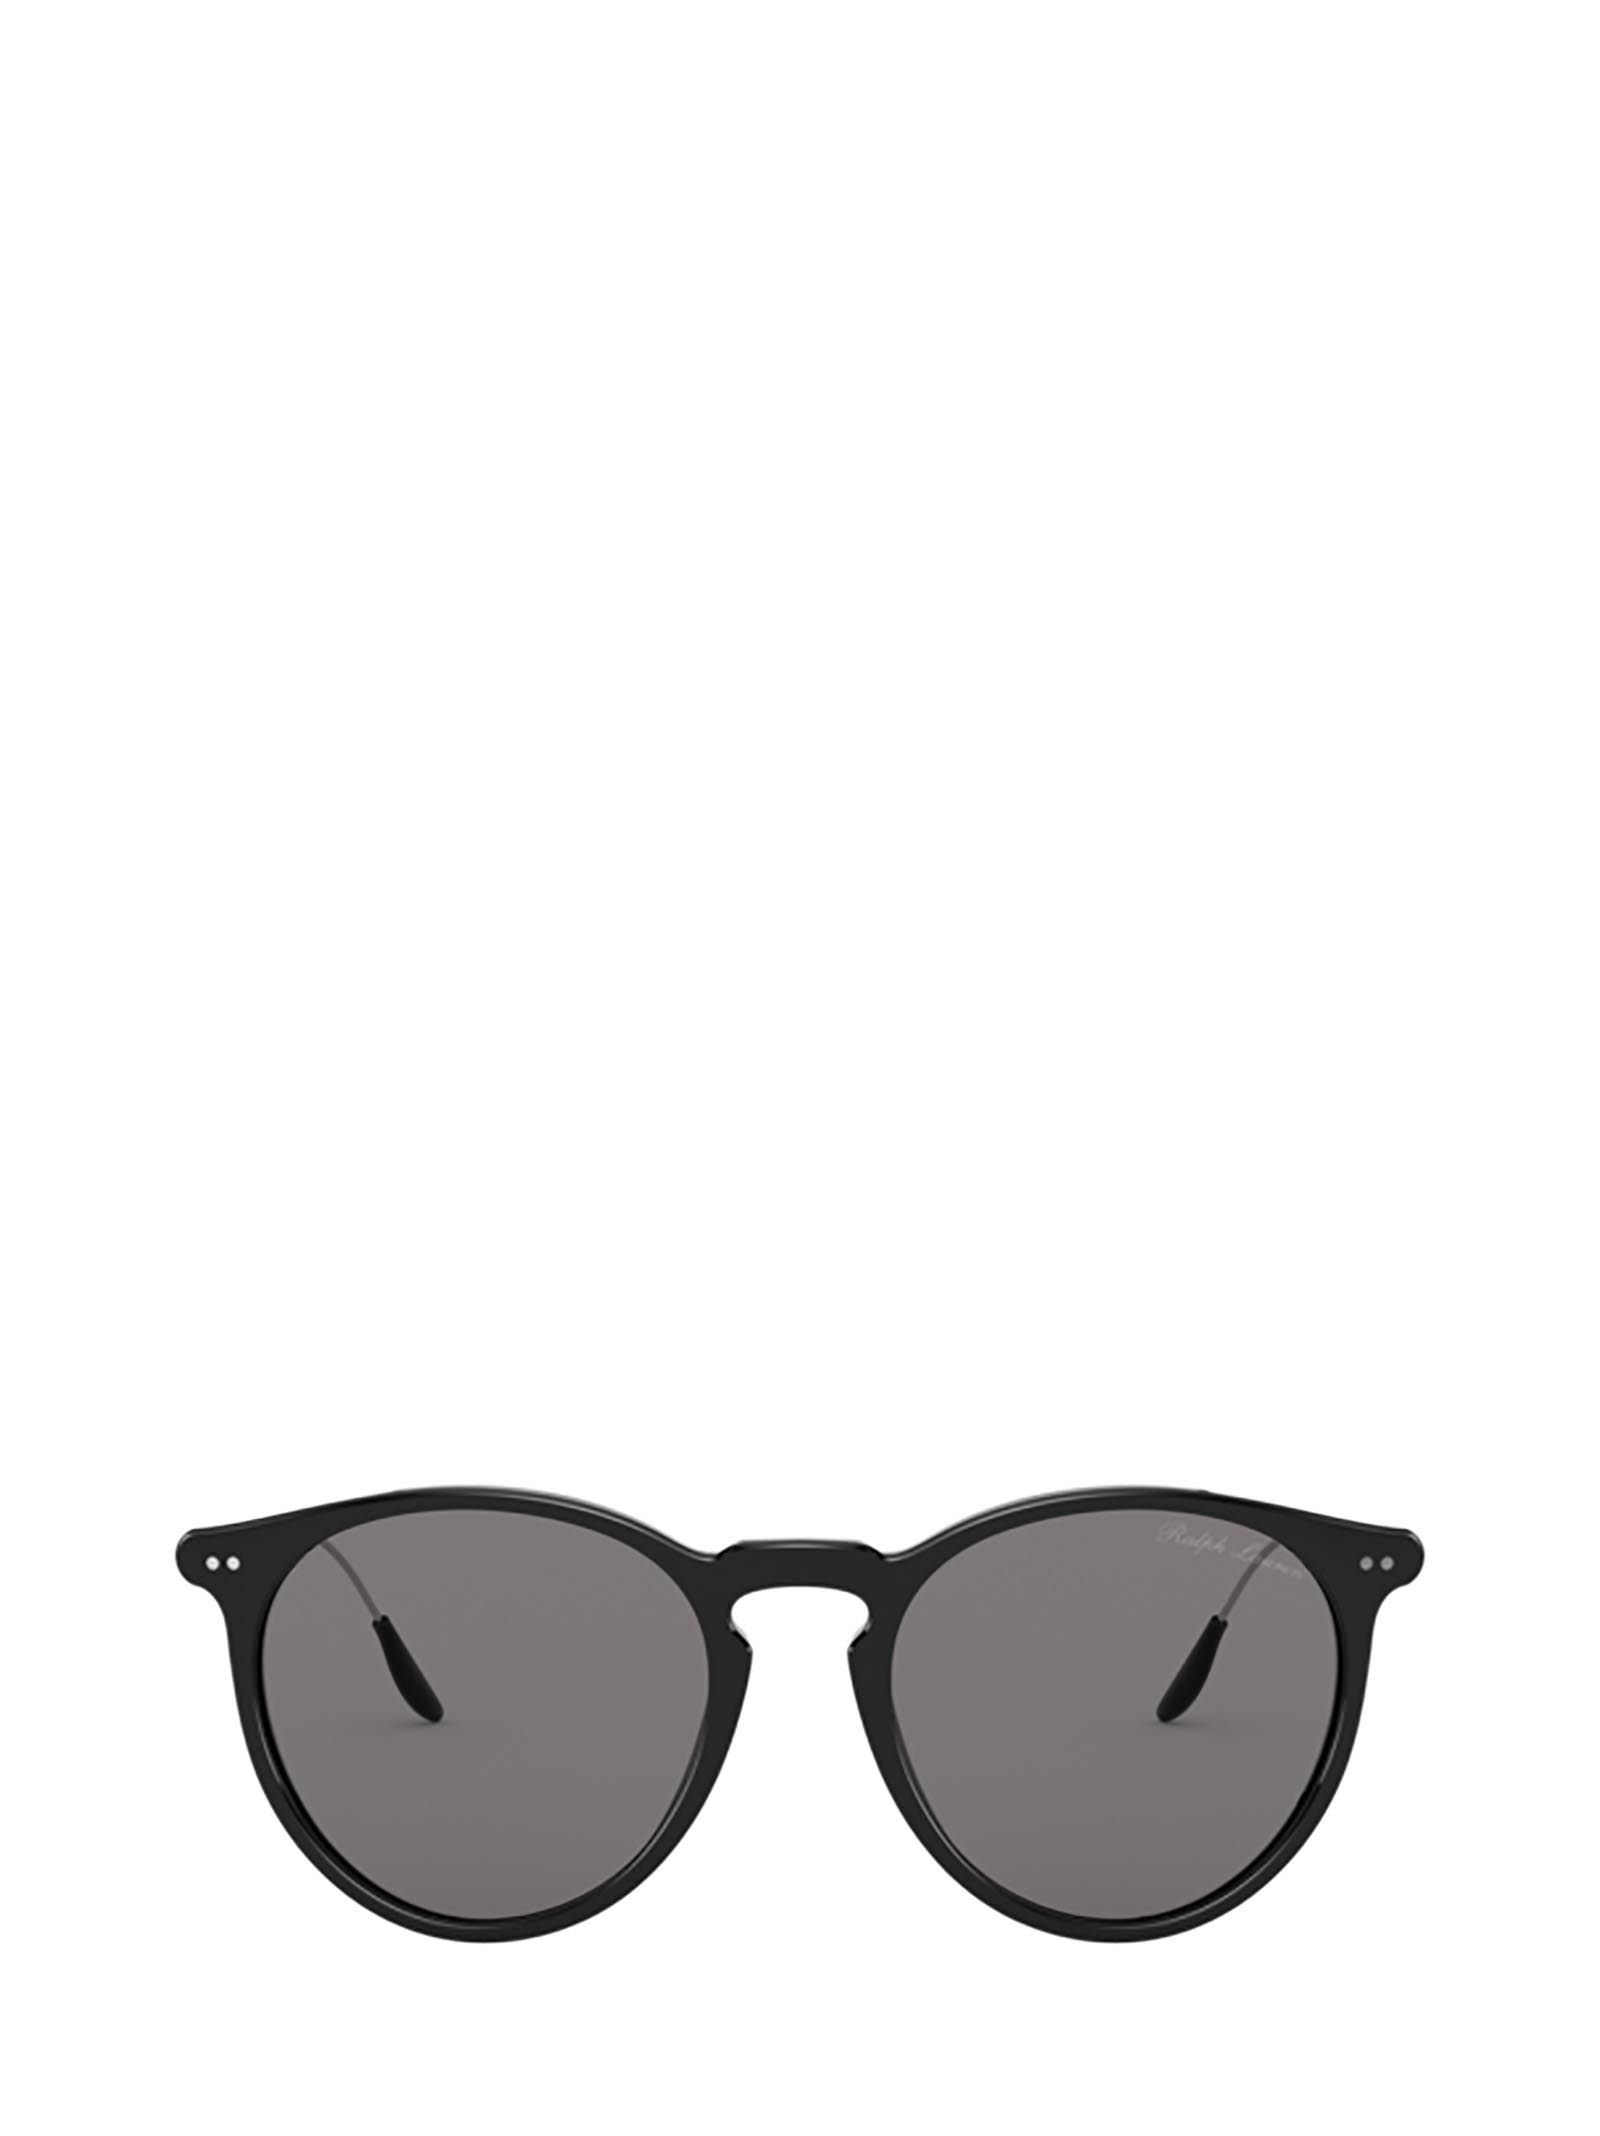 Ralph Lauren Ralph Lauren Rl8181p Shiny Black Sunglasses